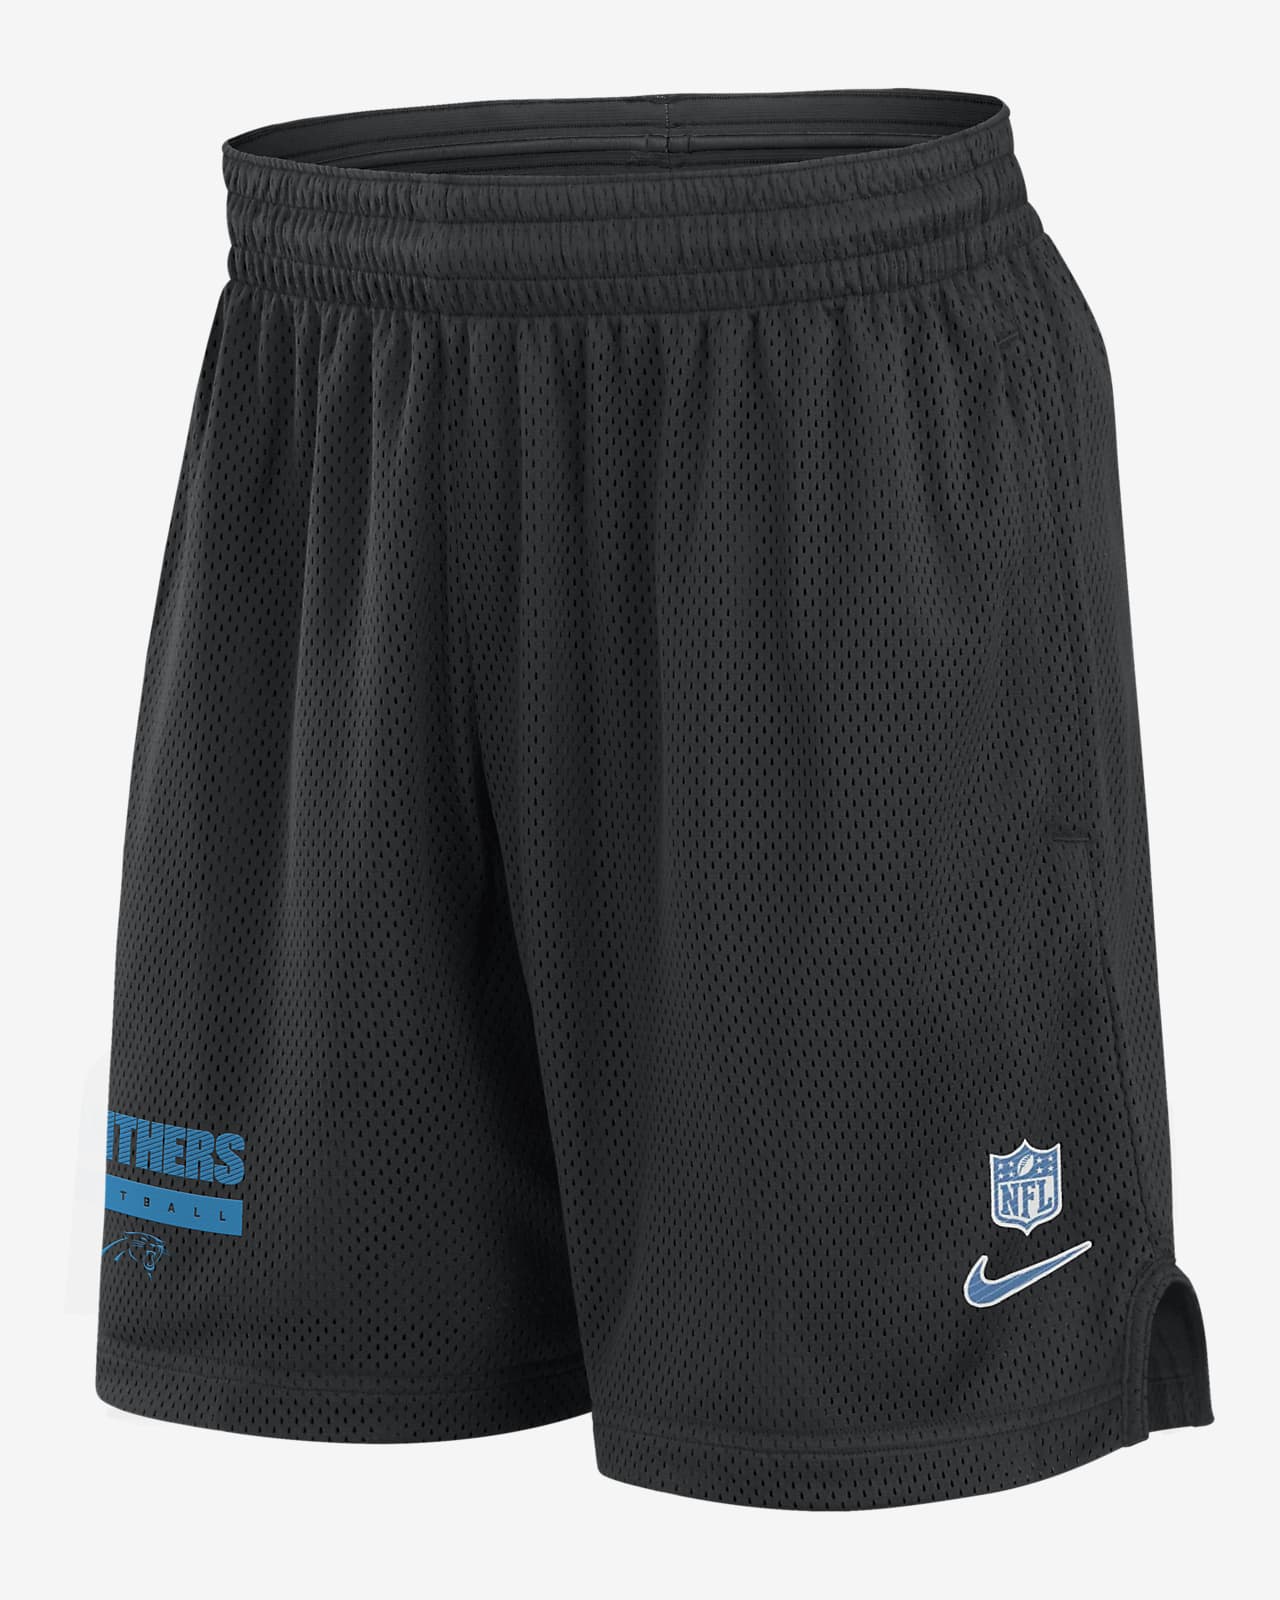 Shorts Nike Dri-FIT de la NFL para hombre Carolina Panthers Sideline